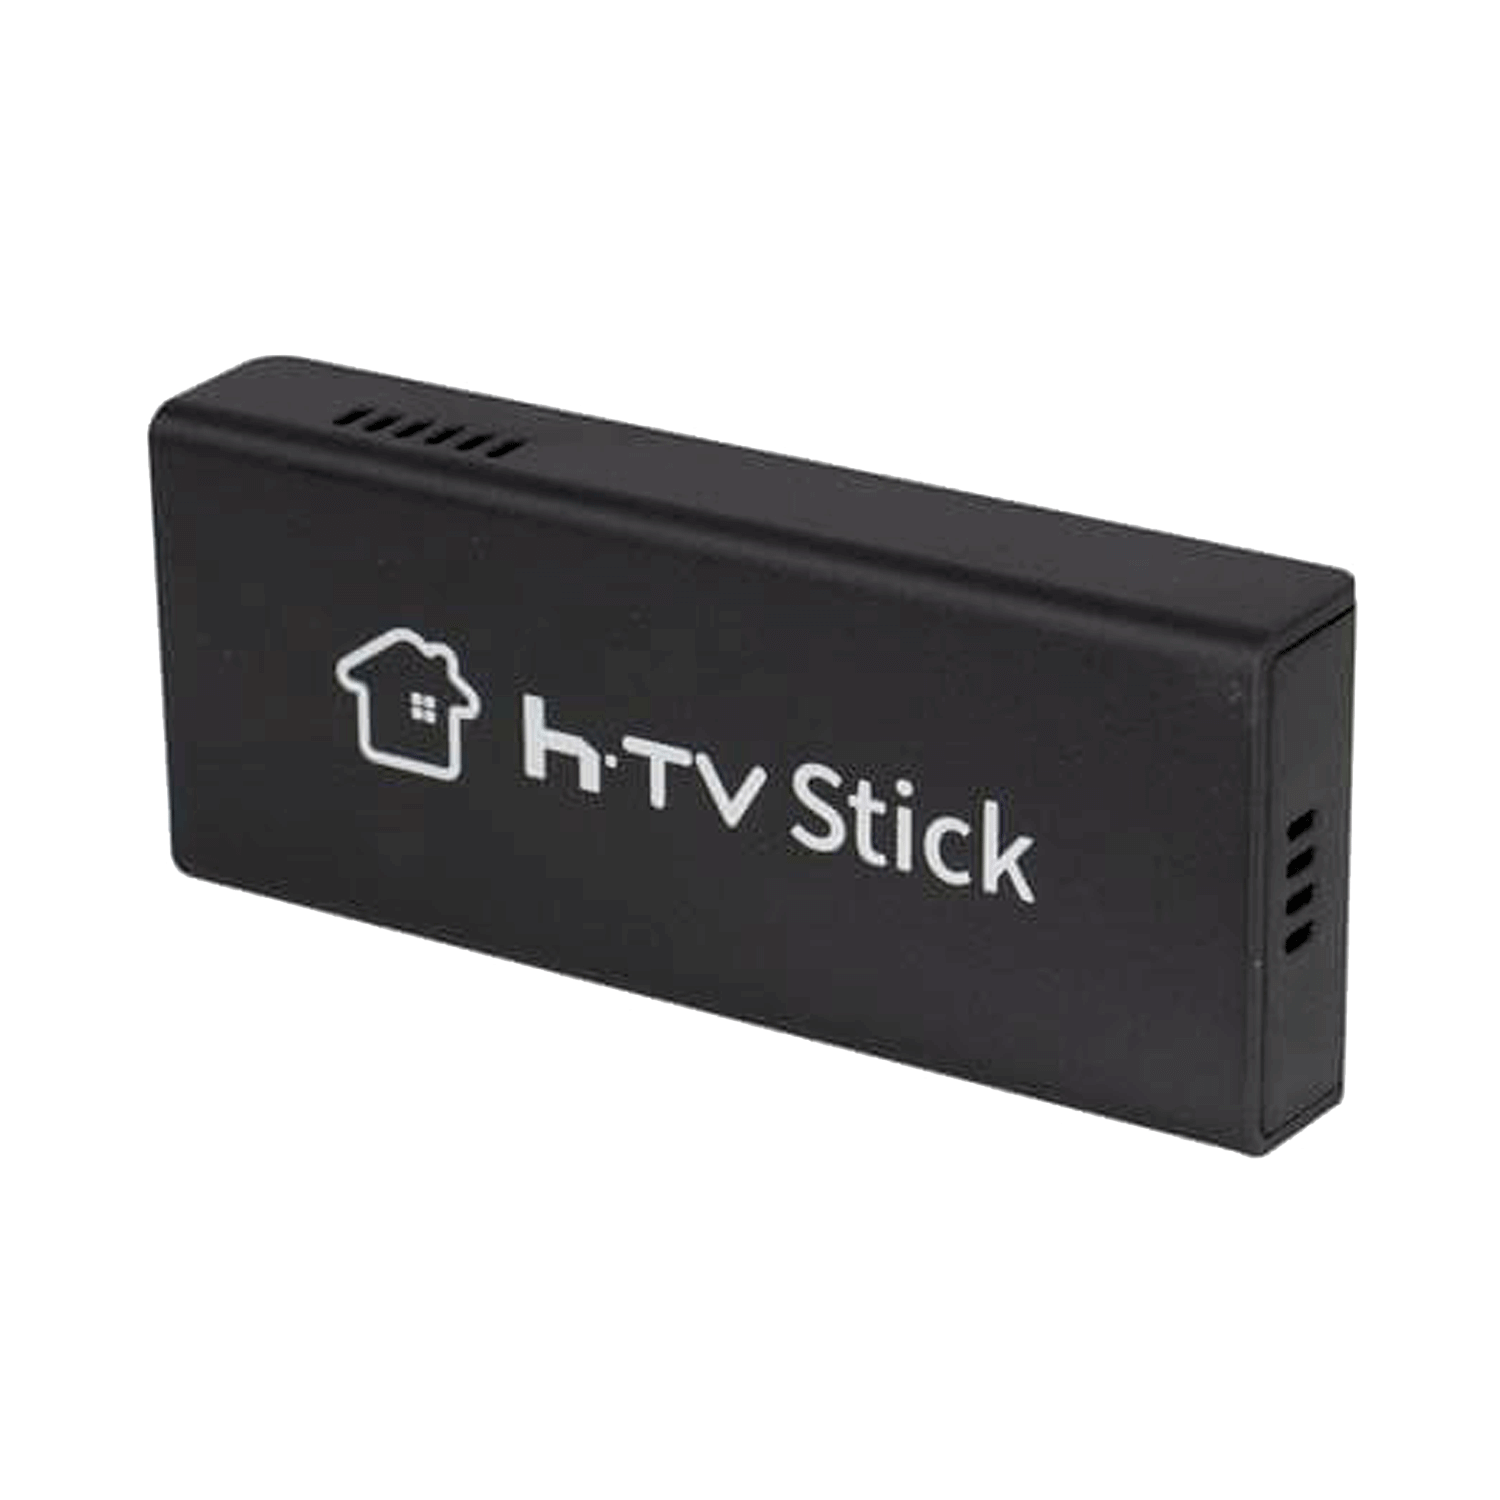 Receptor Redstick 2 4K Ultra HD Wifi - Preto